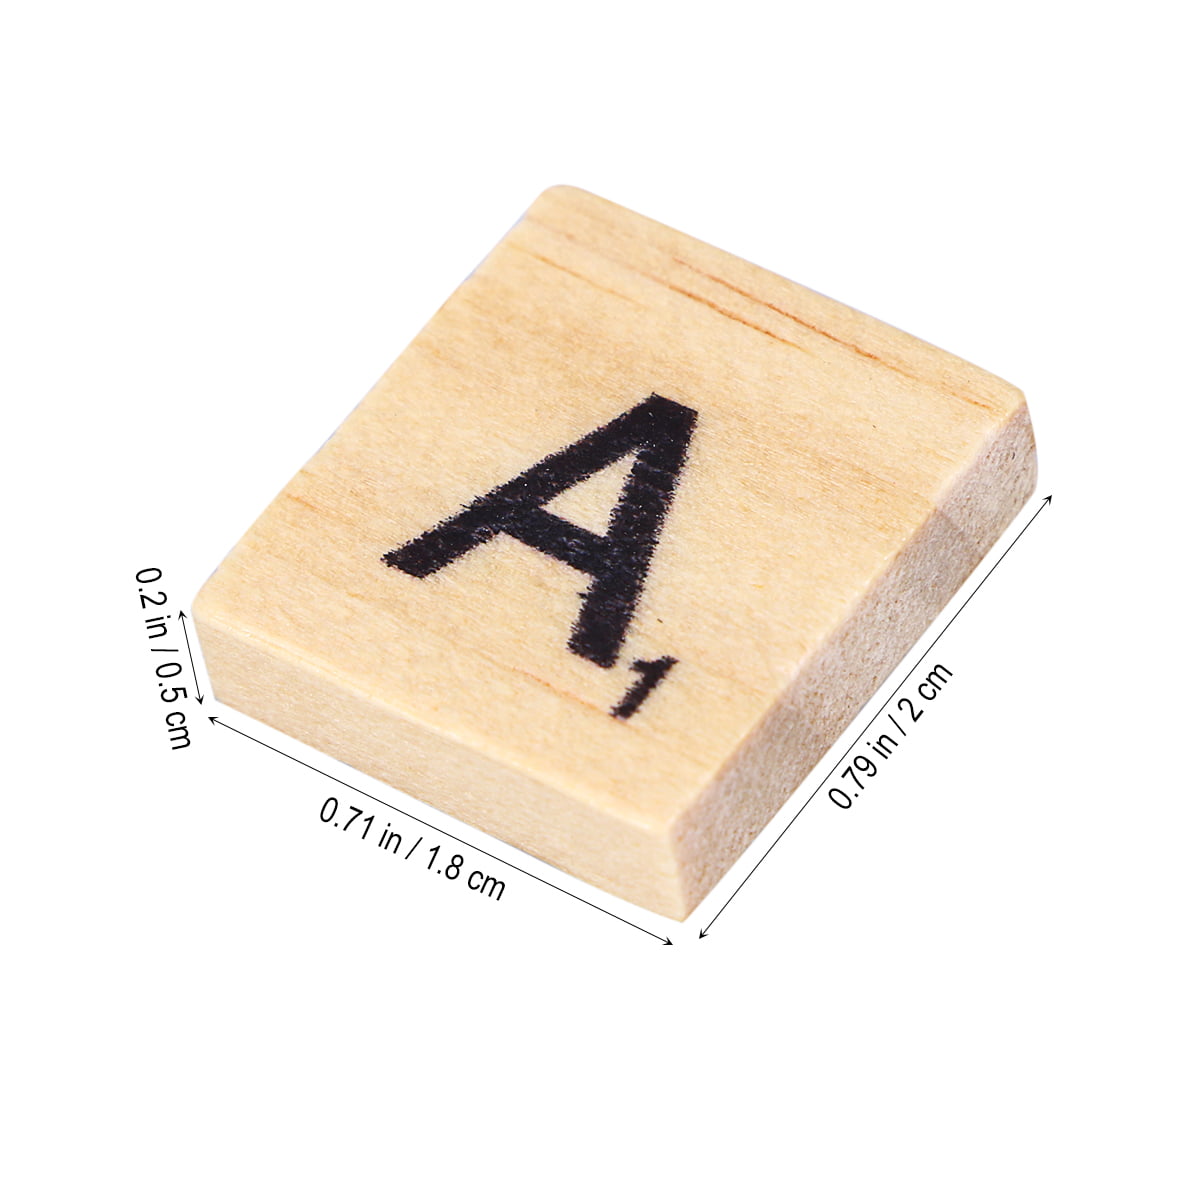 Scrabble Tiles Replacement Letter D Maroon Burgundy Wooden Craft Game Part Piece 